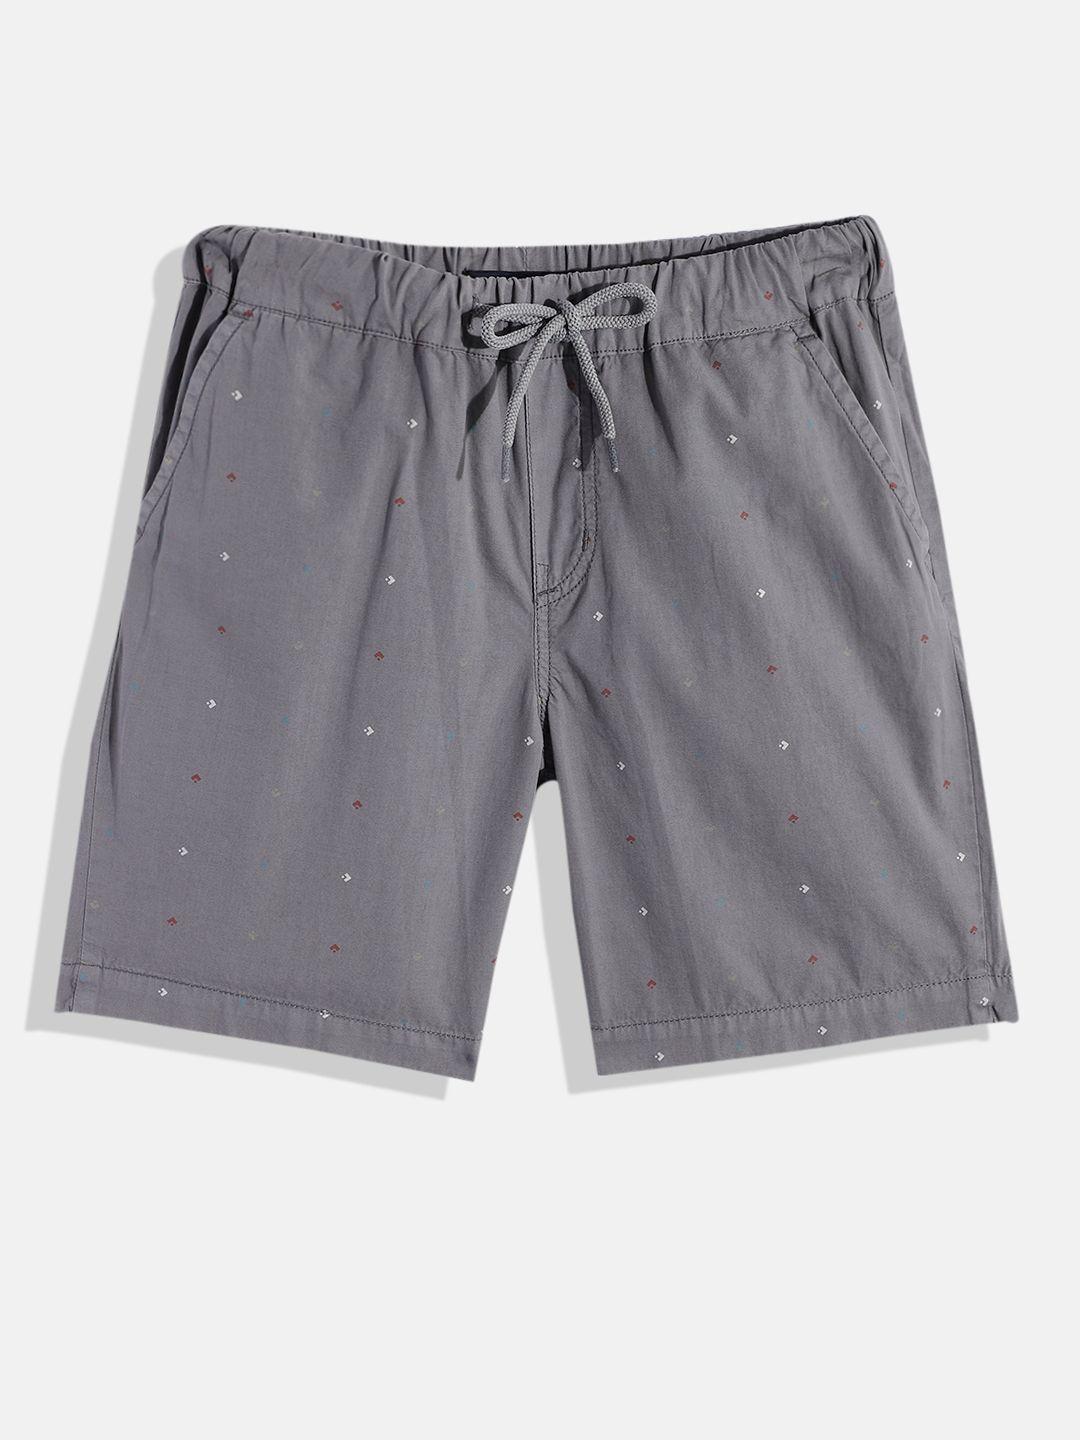 m&h juniors boys grey printed pure cotton shorts